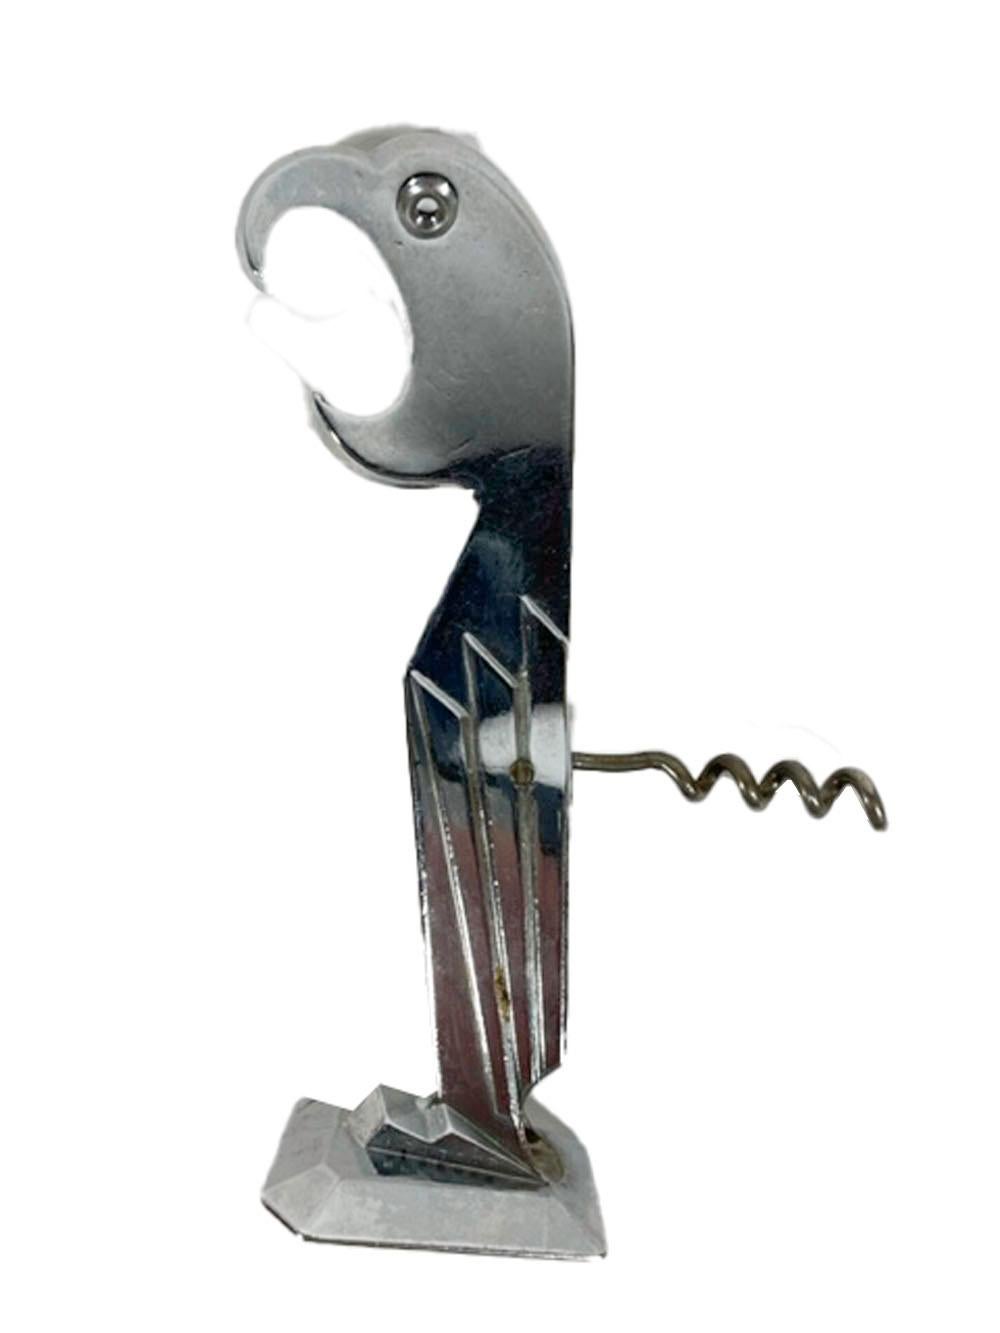 20th Century Art Deco Chrome Stylized Standing Parrot Corkscrew / Bottle Opener by Negbaur